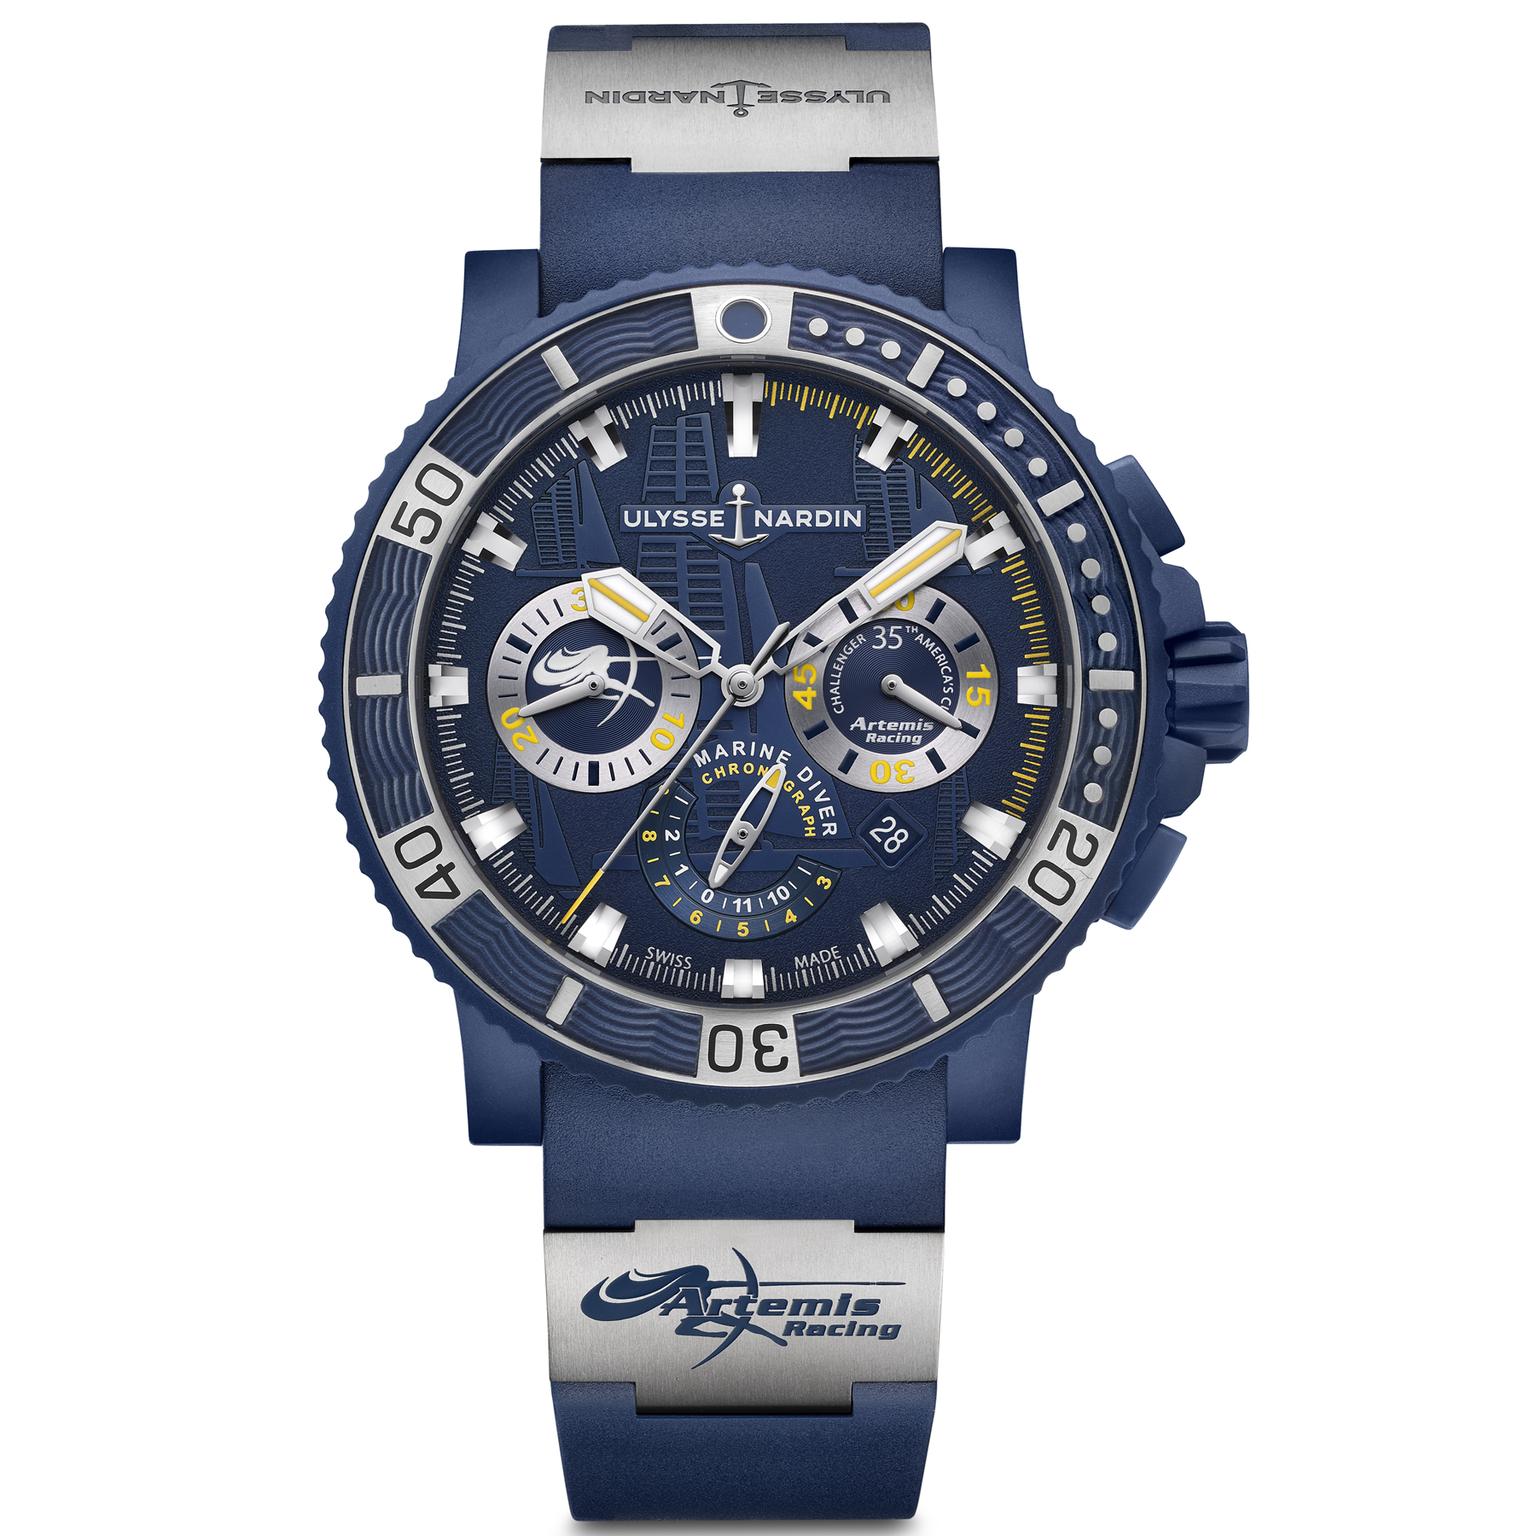 Ulysse Nardin Diver Chronograph Artemis Racing watch